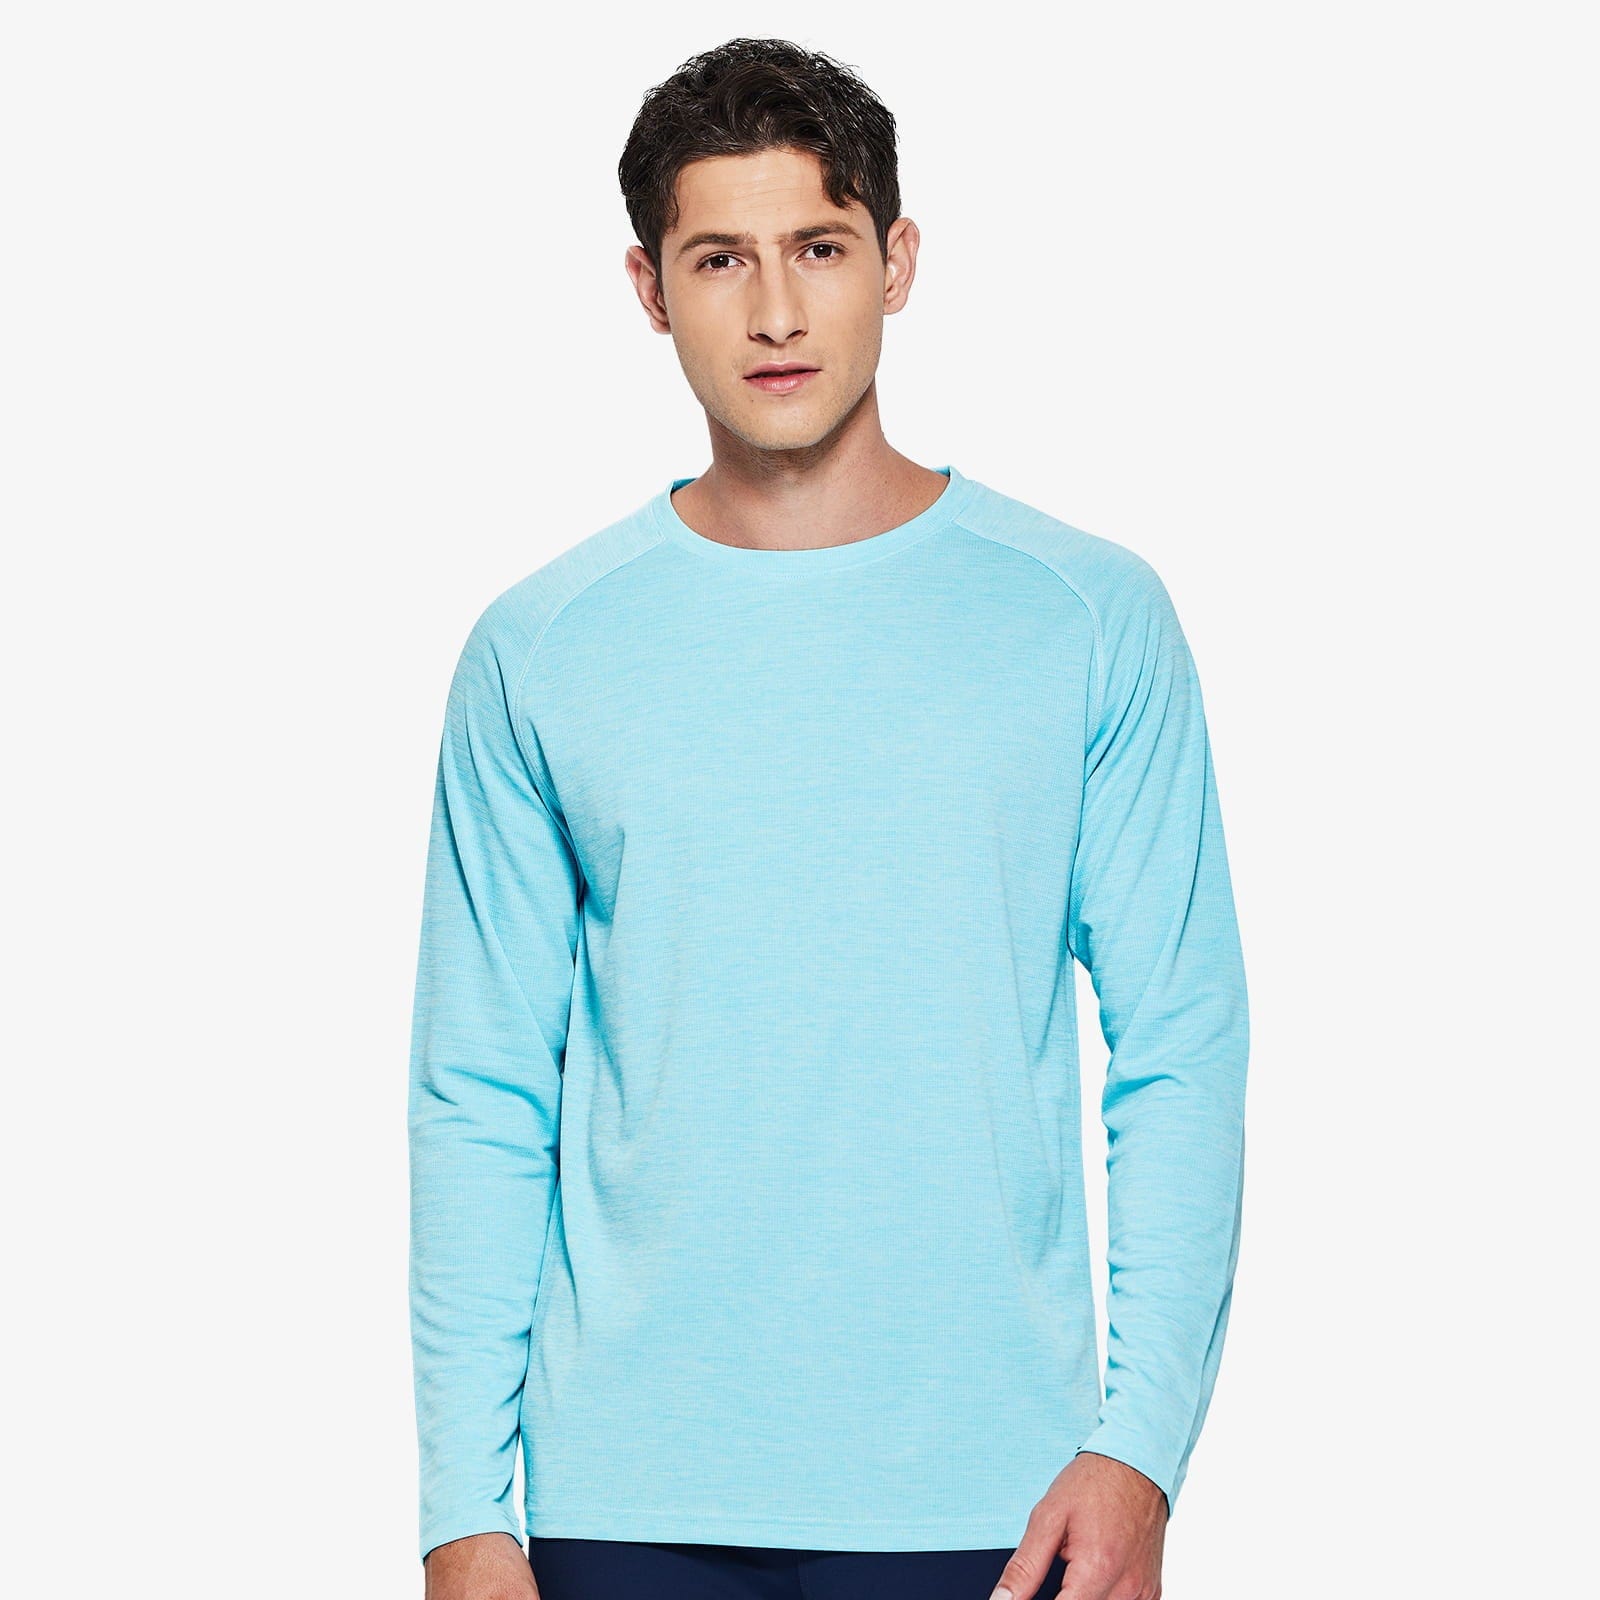 Yeashow Men's Sun Protection Long Sleeve Shirt Outdoor Sports Performance Shirts Running Workout T-Shirt Upf 50+ Blue S